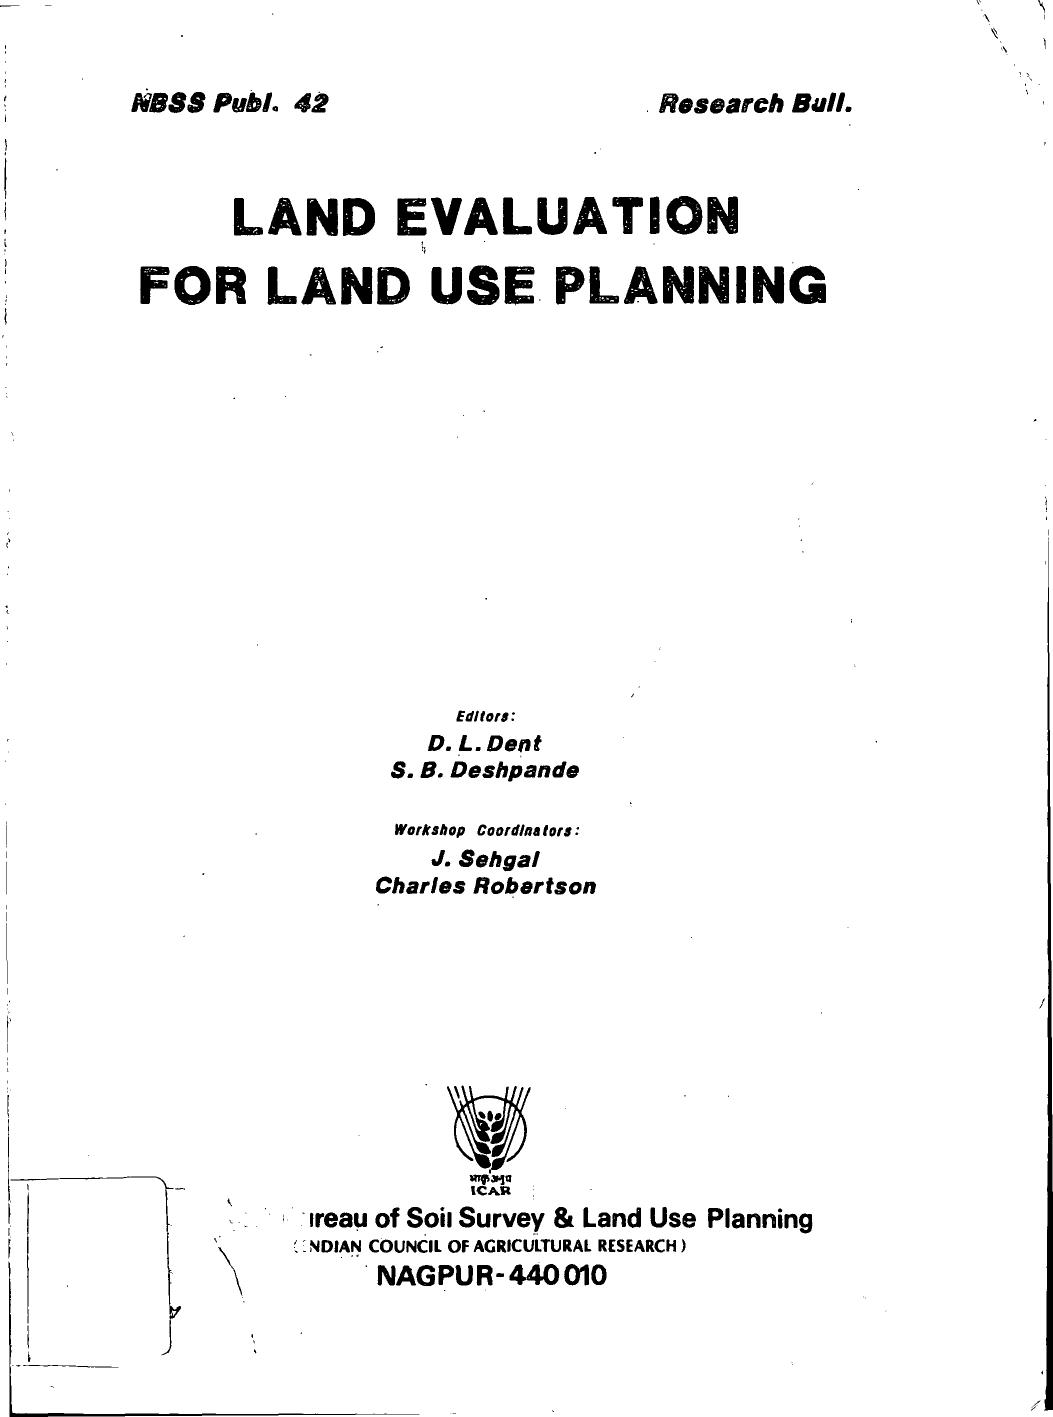 land evaluation for land use planning. 1993